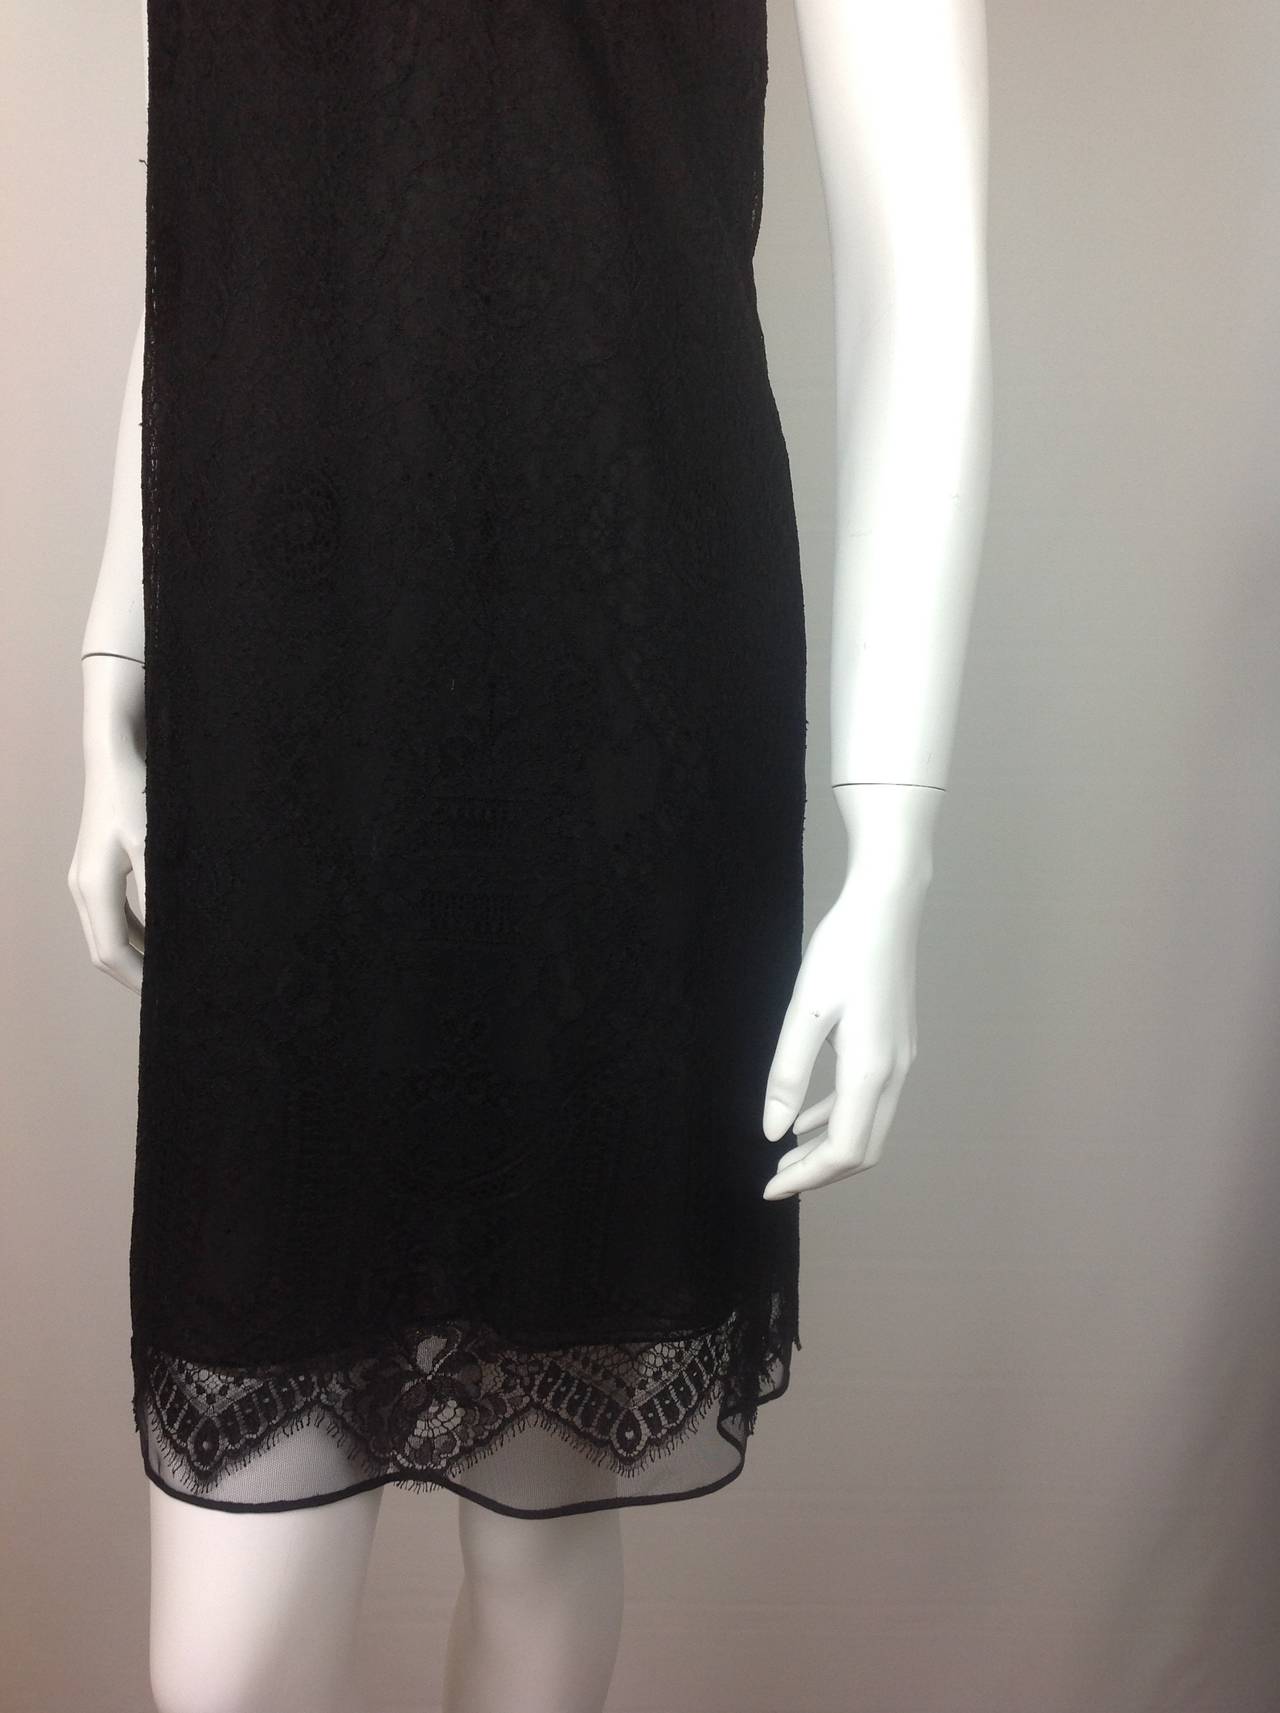 Gorgeous Ralph Rucci black lace sheath dress         Size S 3